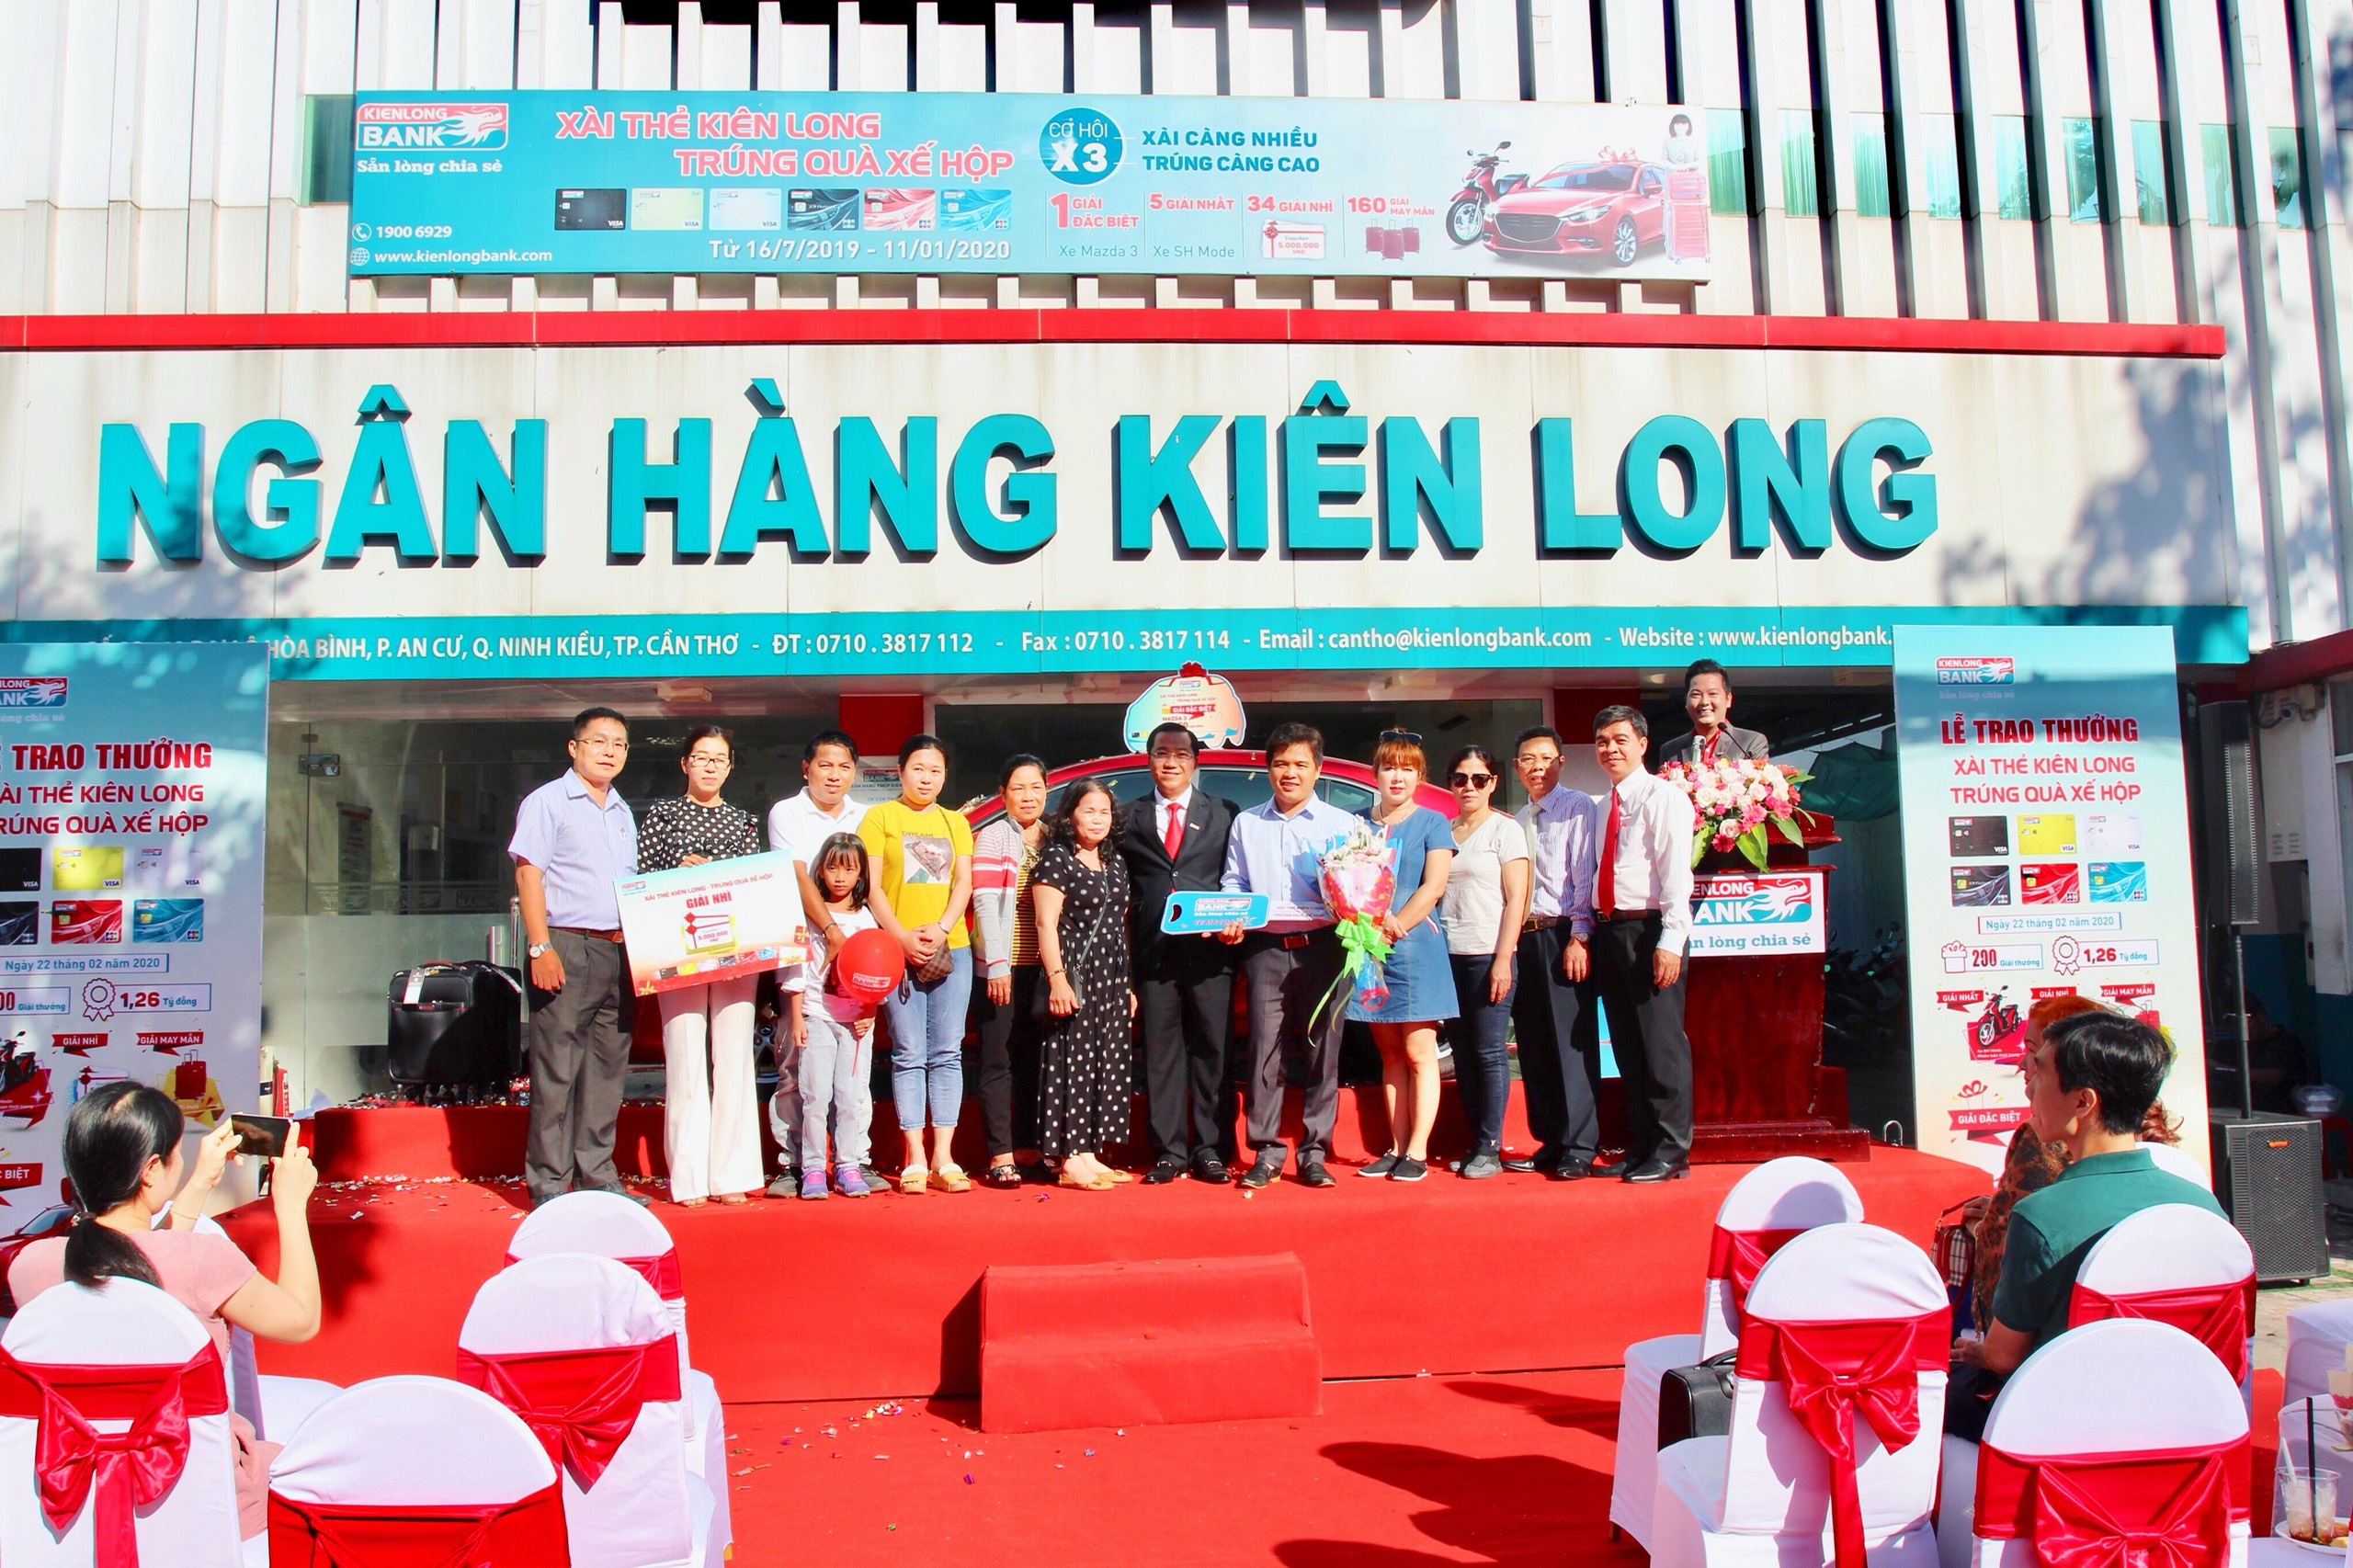 Kienlongbank organized special awards - Car, worth VND 660 million